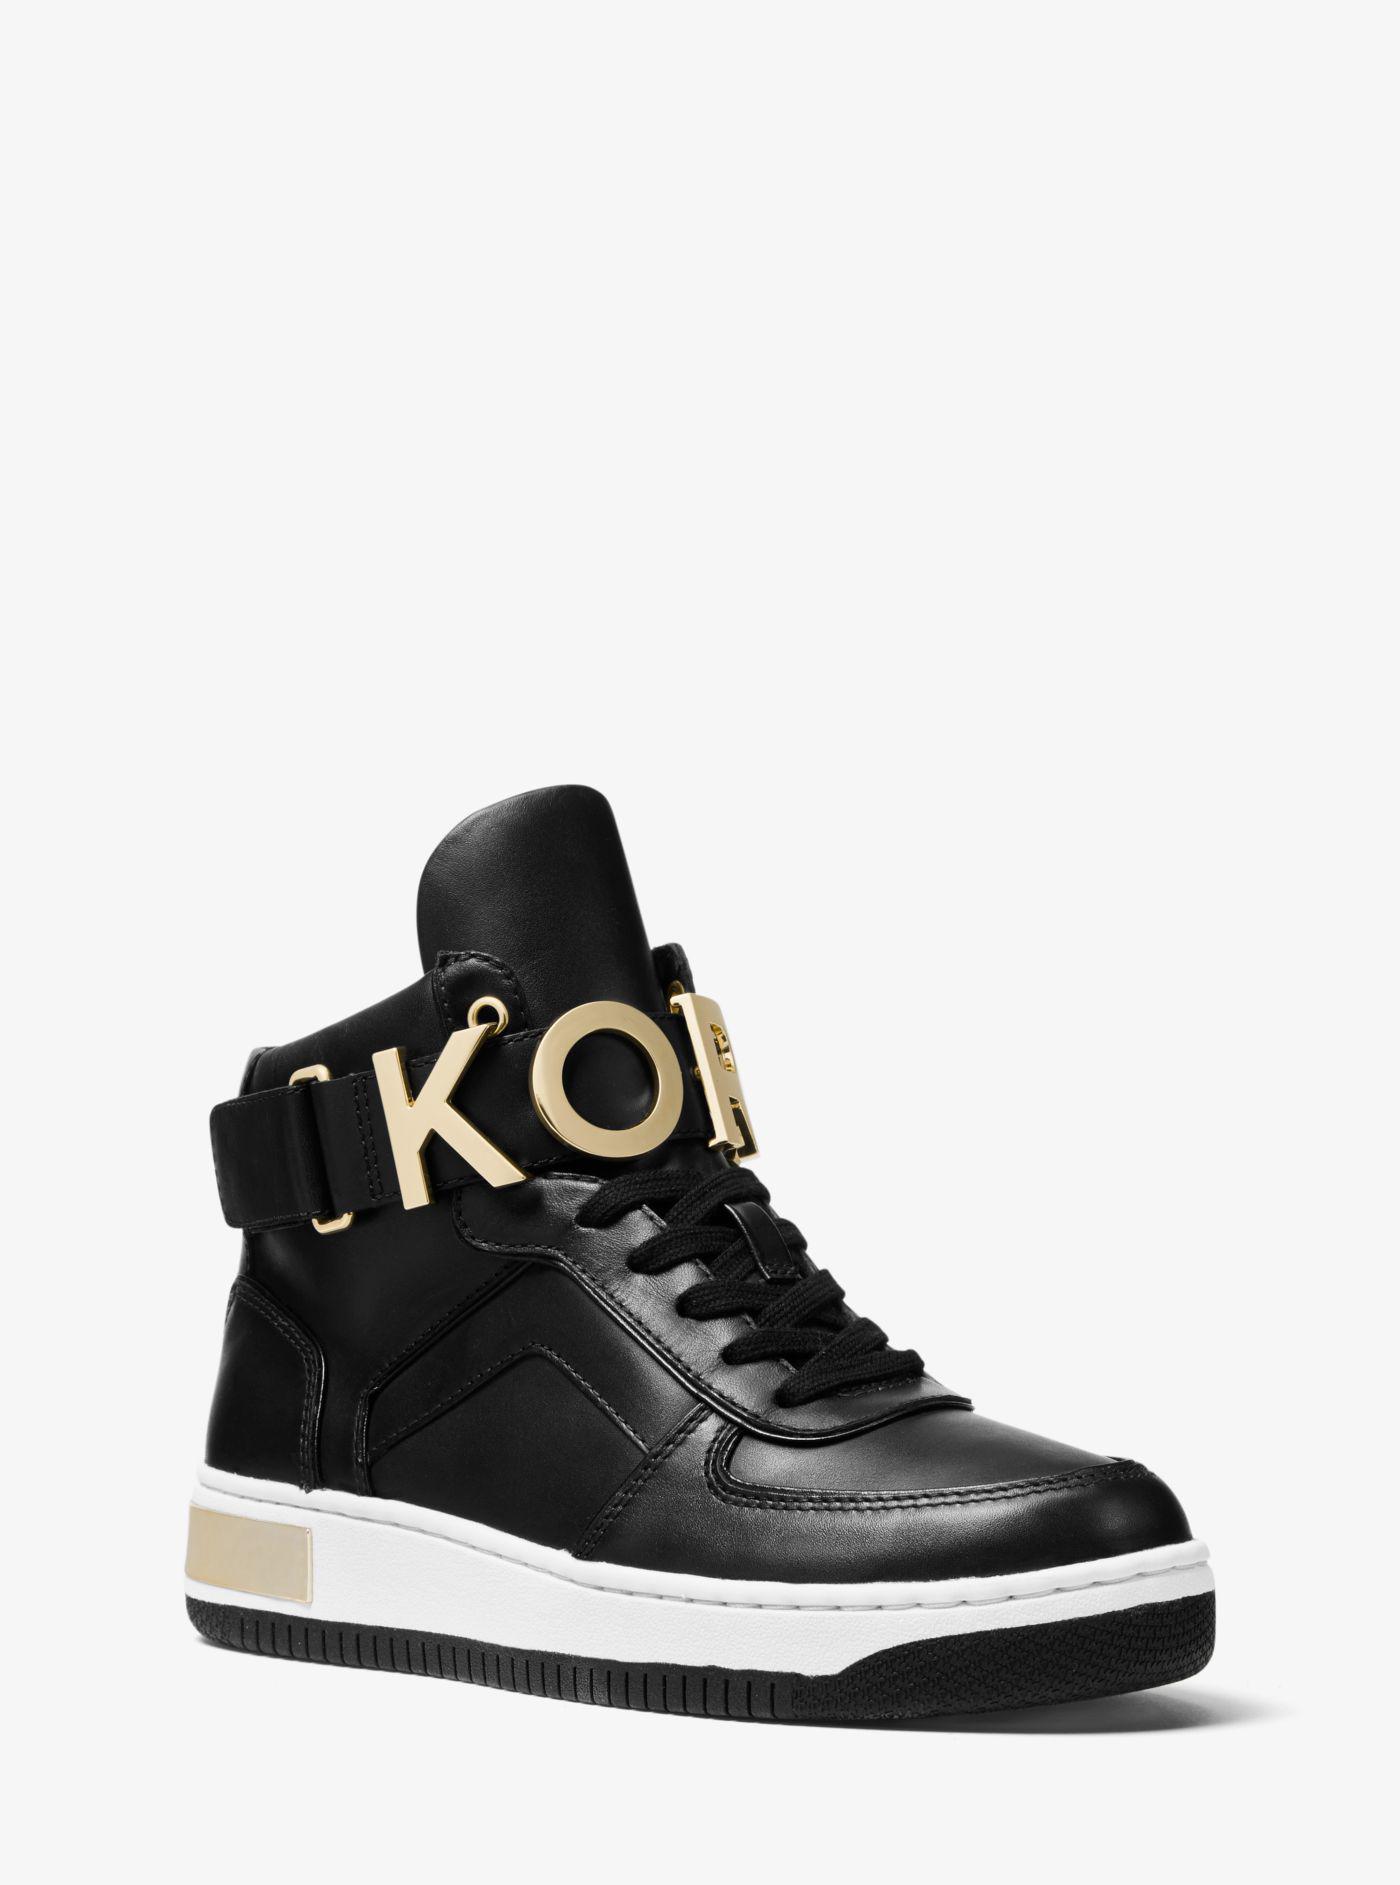 Michael Kors Cortlandt Embellished Leather High-top Sneaker in Black | Lyst